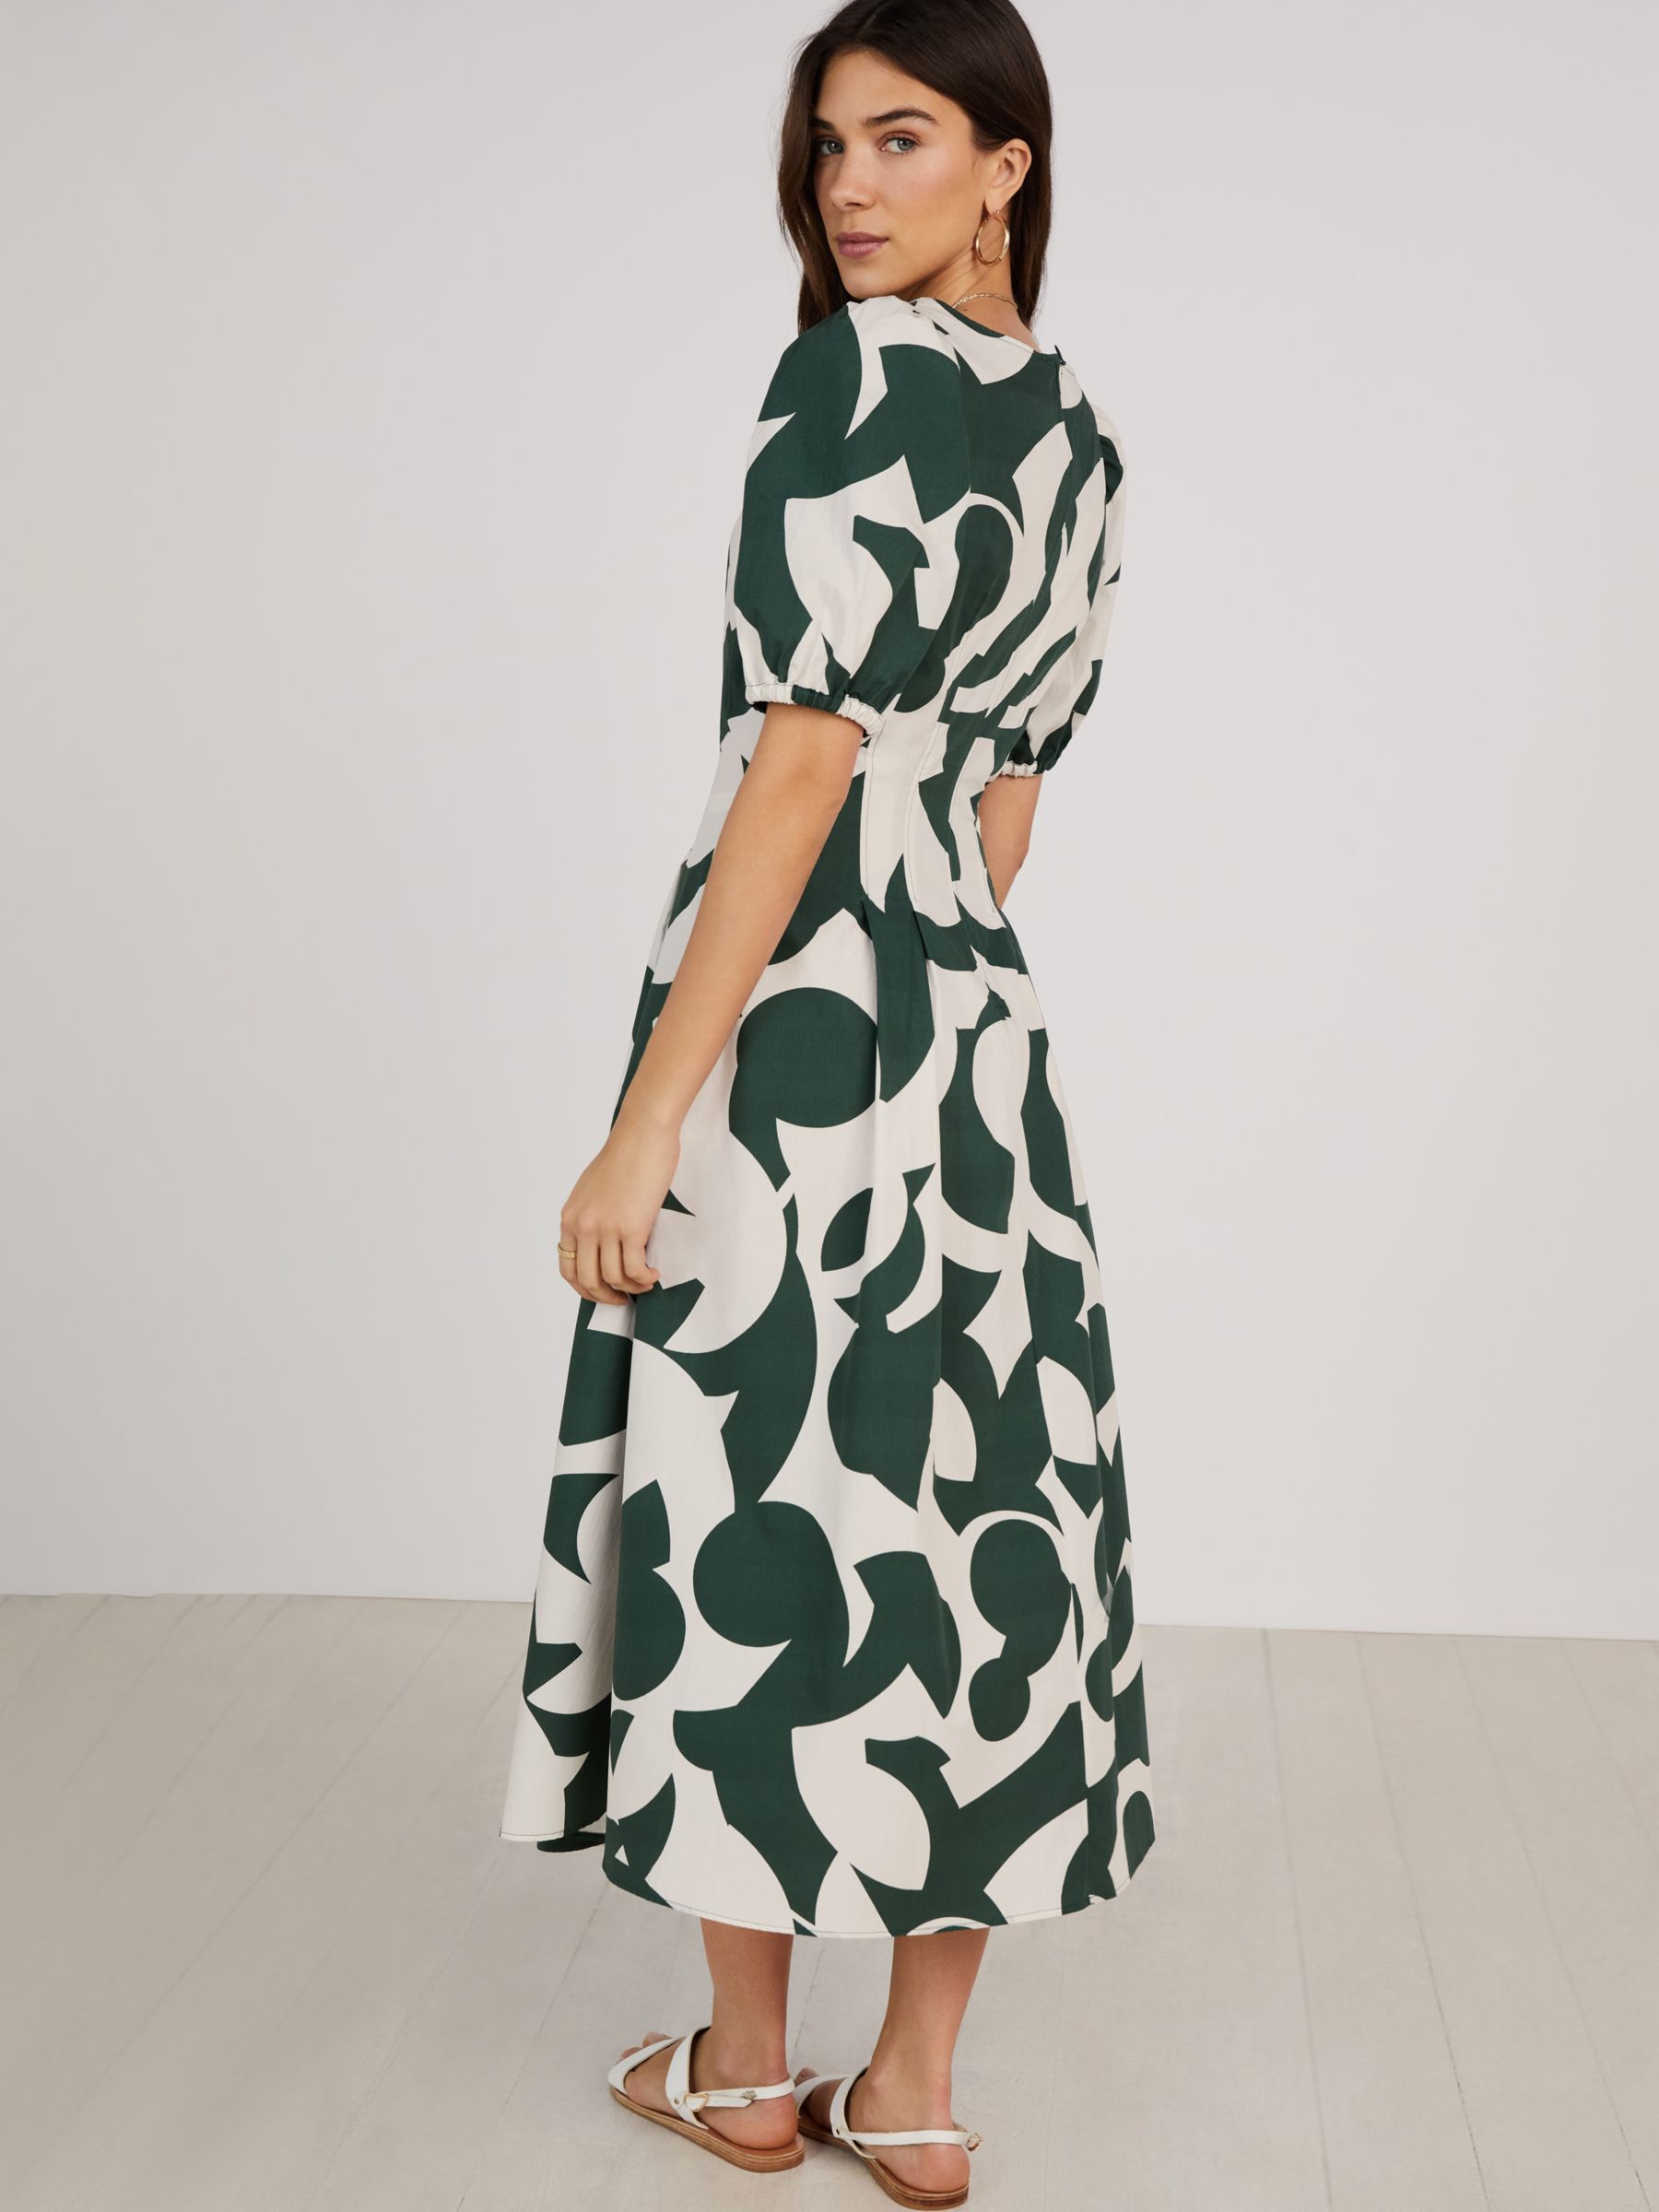 Baukjen Jazlyn Abstract Print Organic Cotton Dress, Green, 10